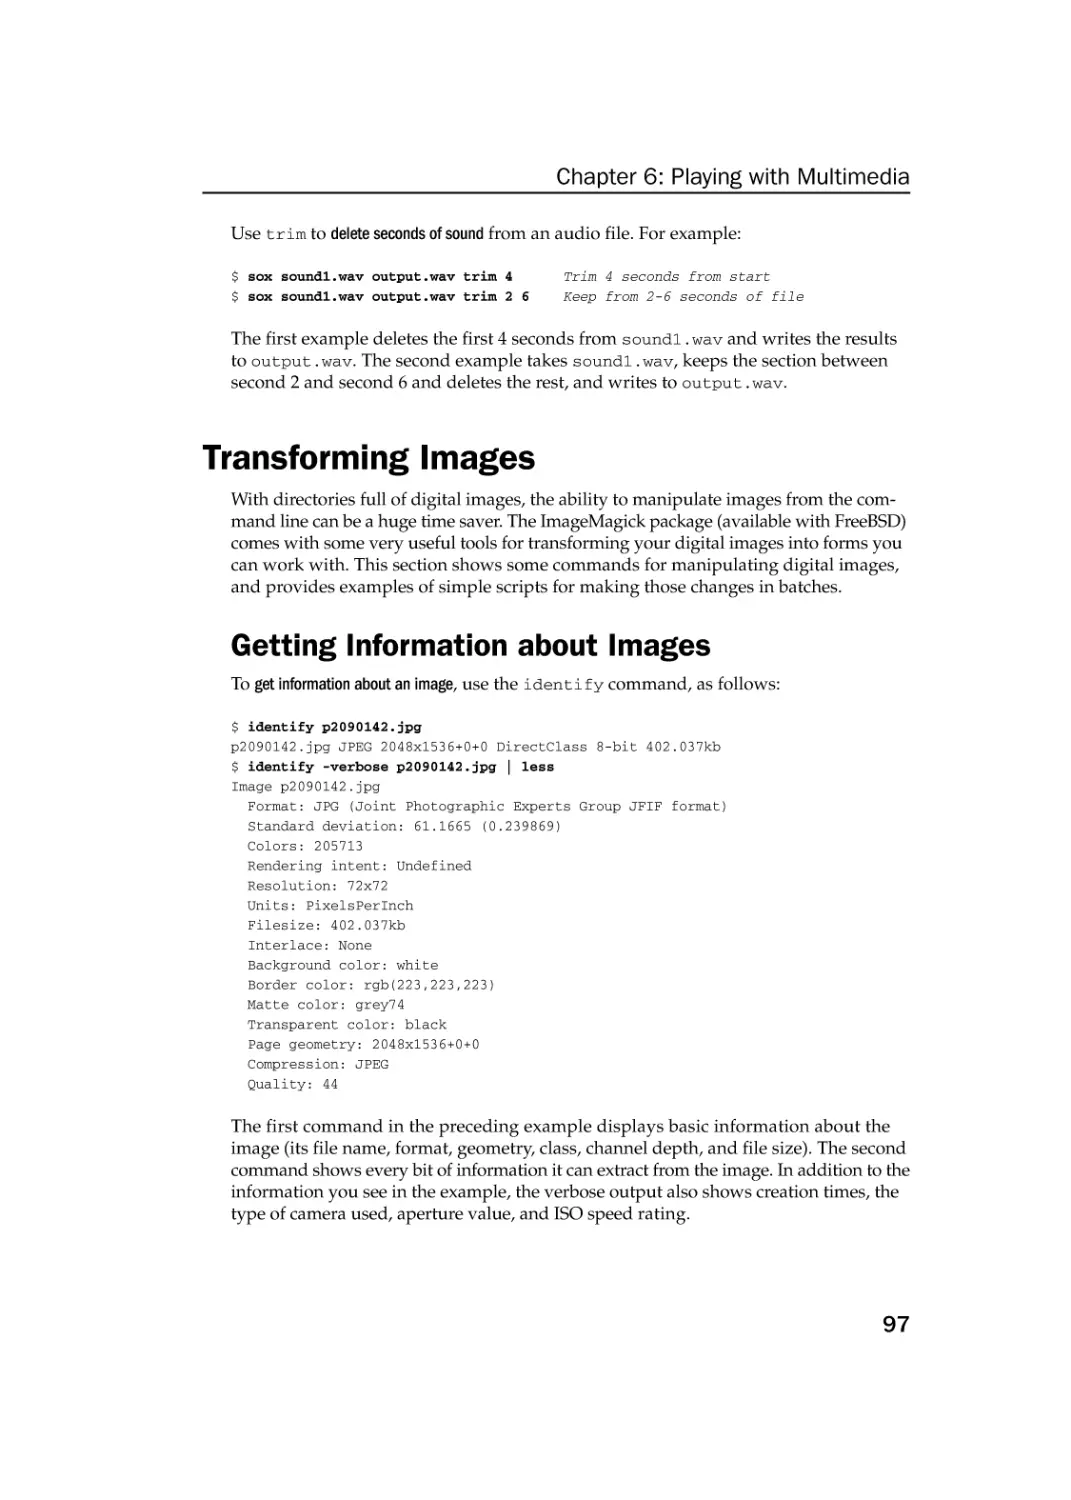 Transforming Images